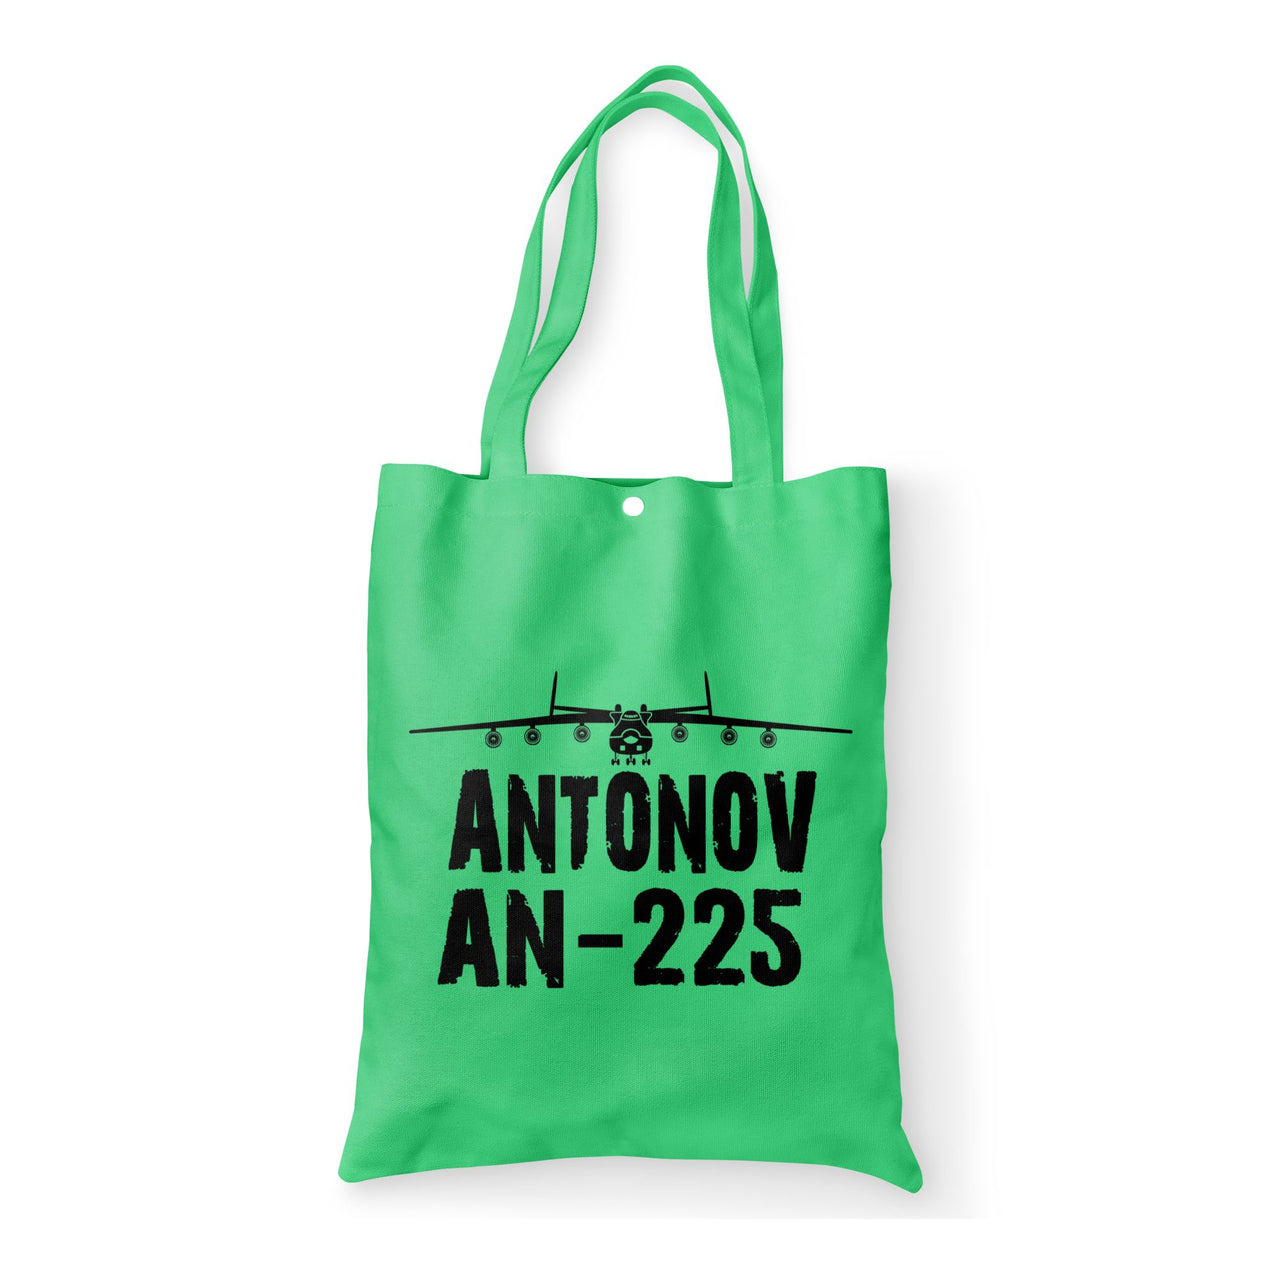 Antonov AN-225 & Plane Designed Tote Bags